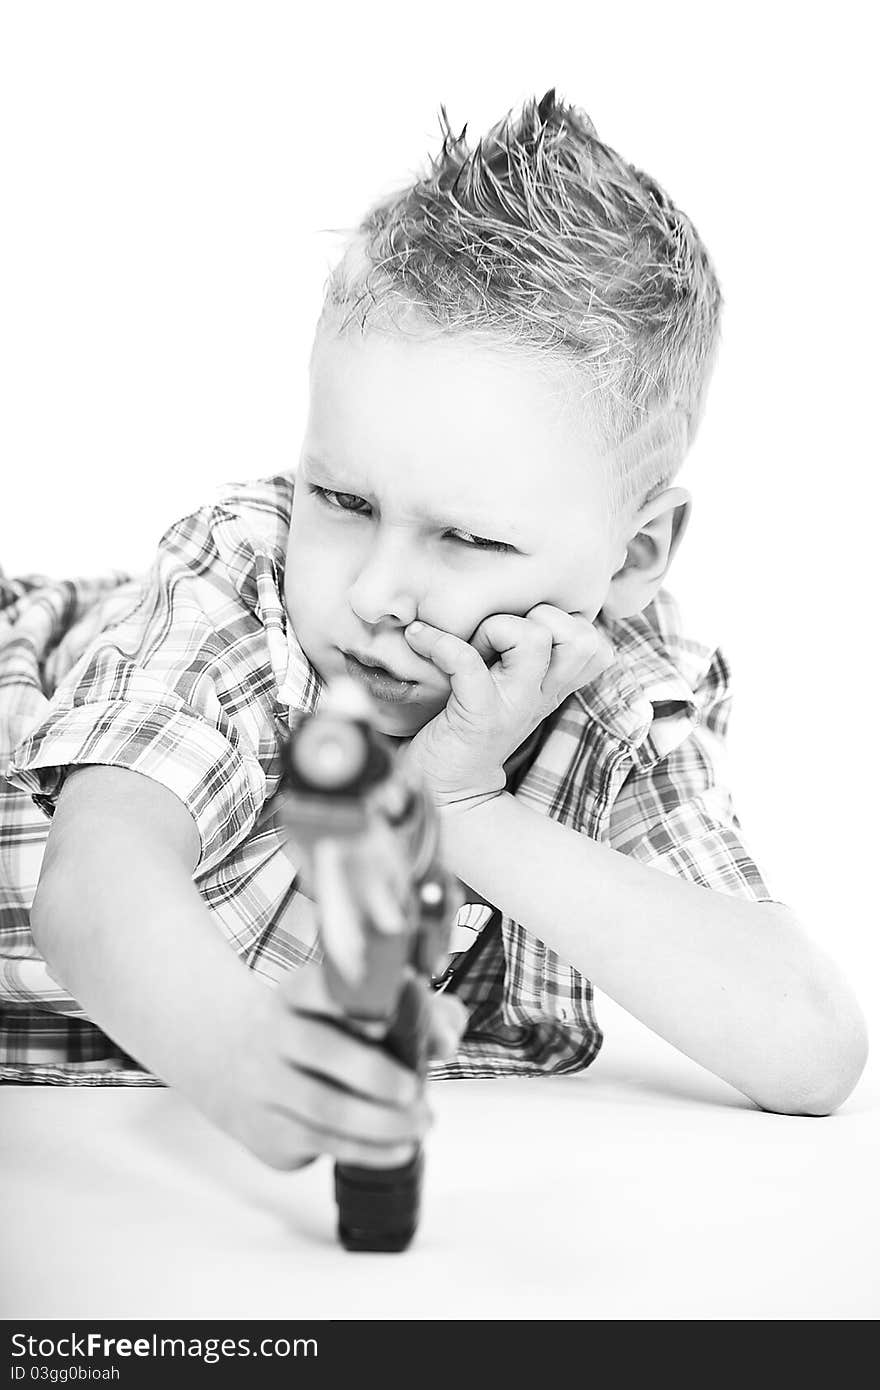 Boy with his toy gun on white background. Boy with his toy gun on white background